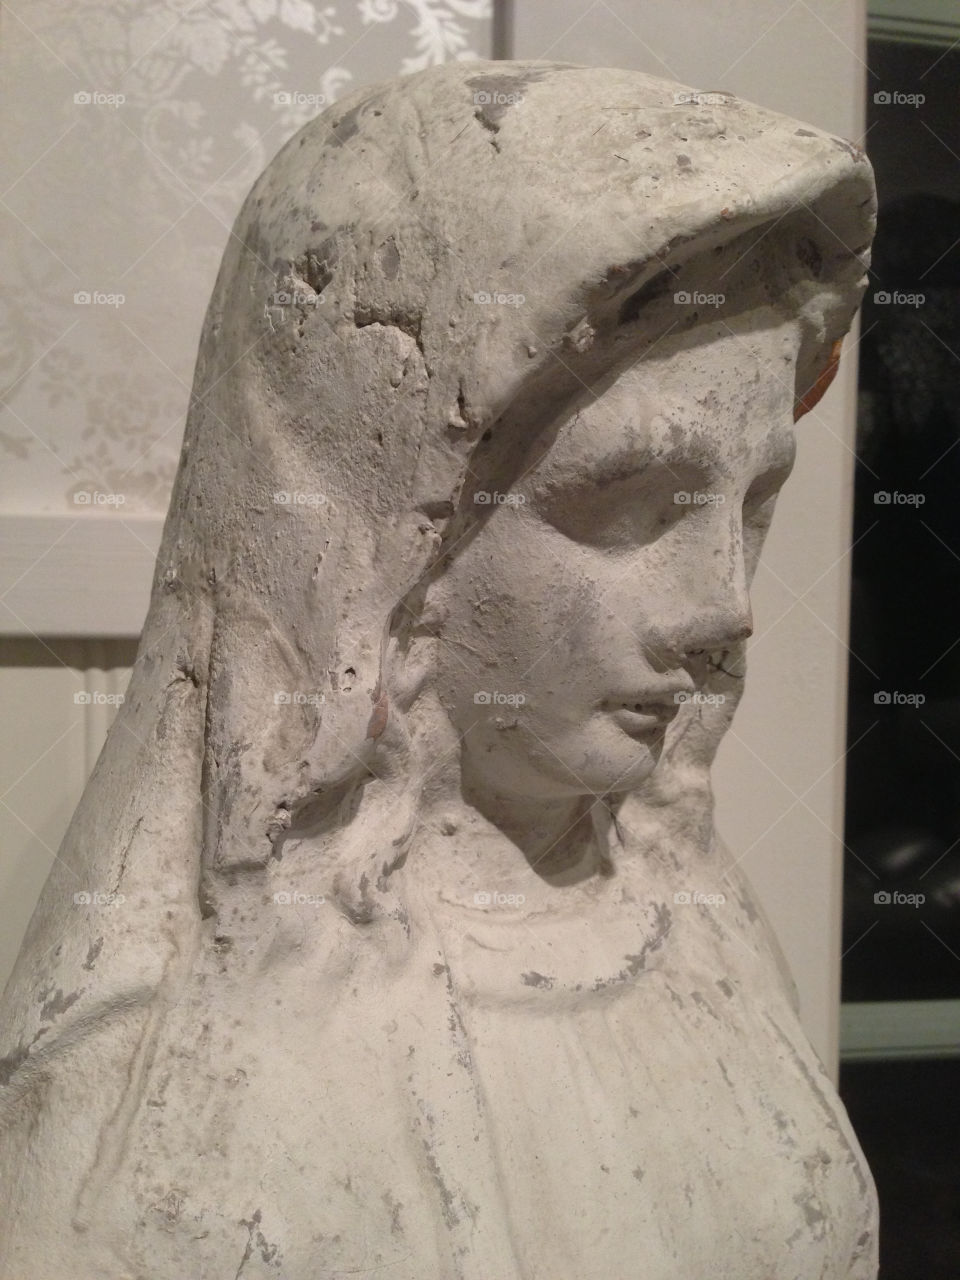 österlens ekosalong statue staty maria by NinaUlrica